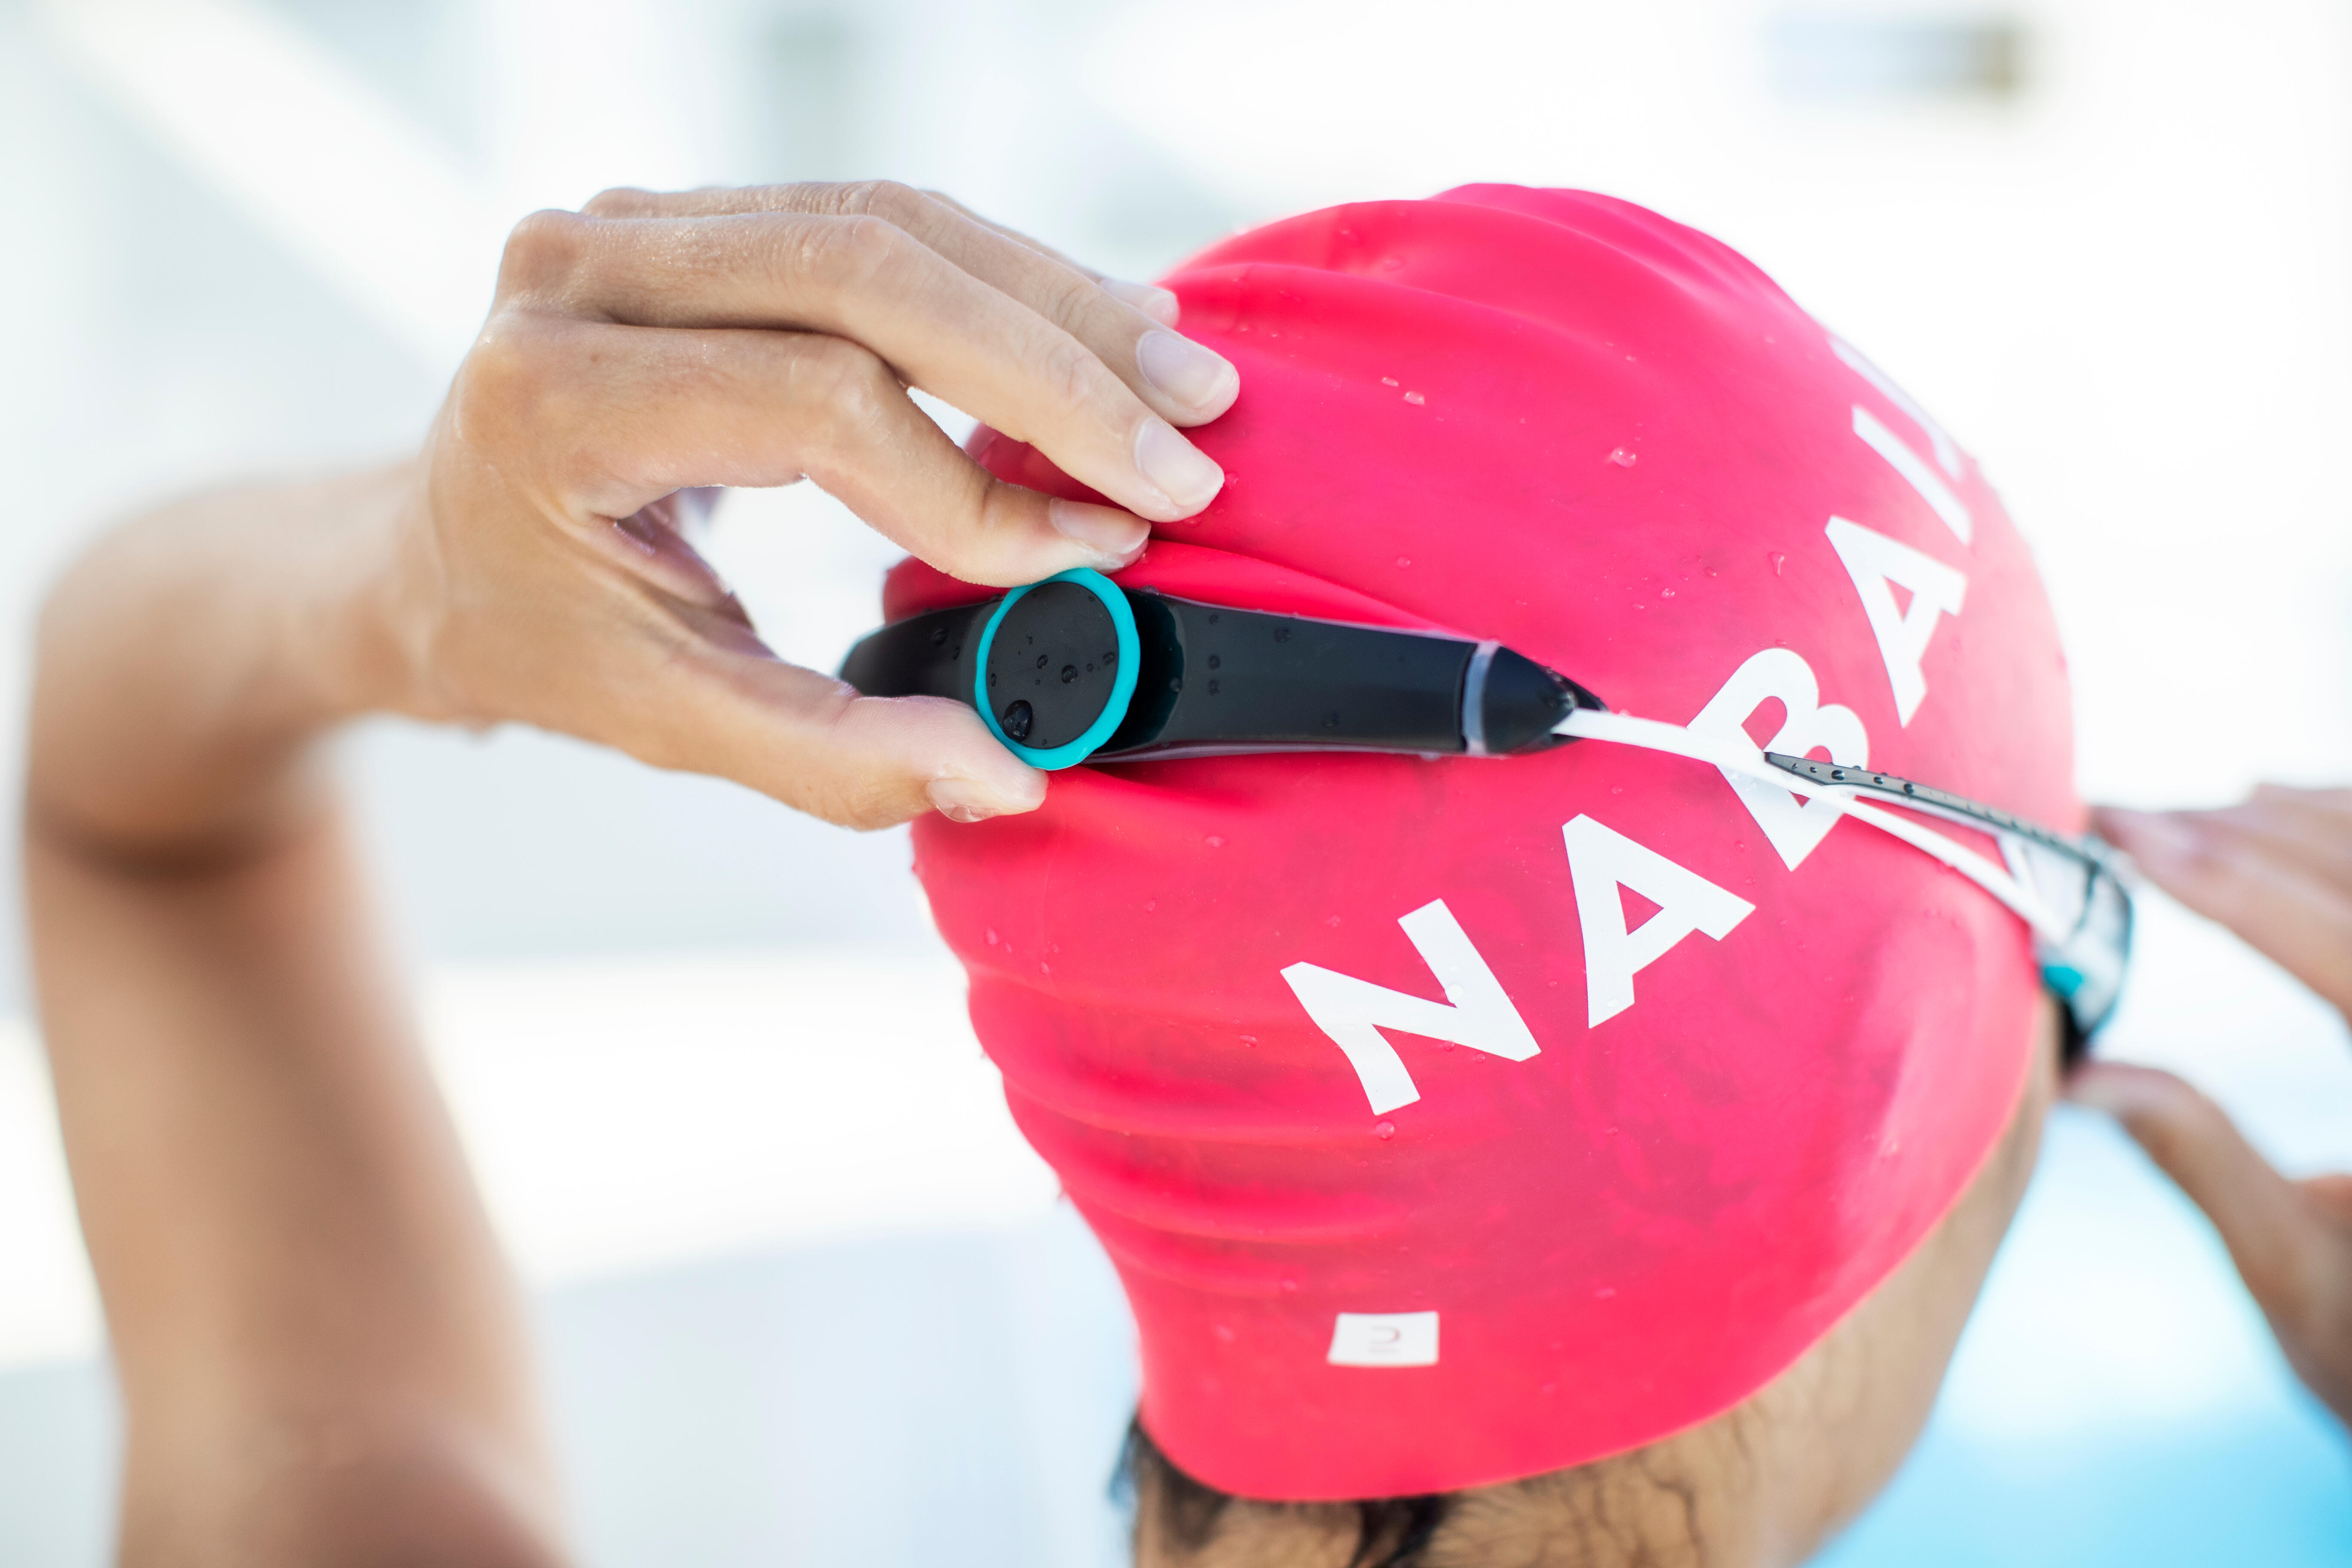 Adjustable Swimming Goggles Smoked Lenses Size S - White - NABAIJI